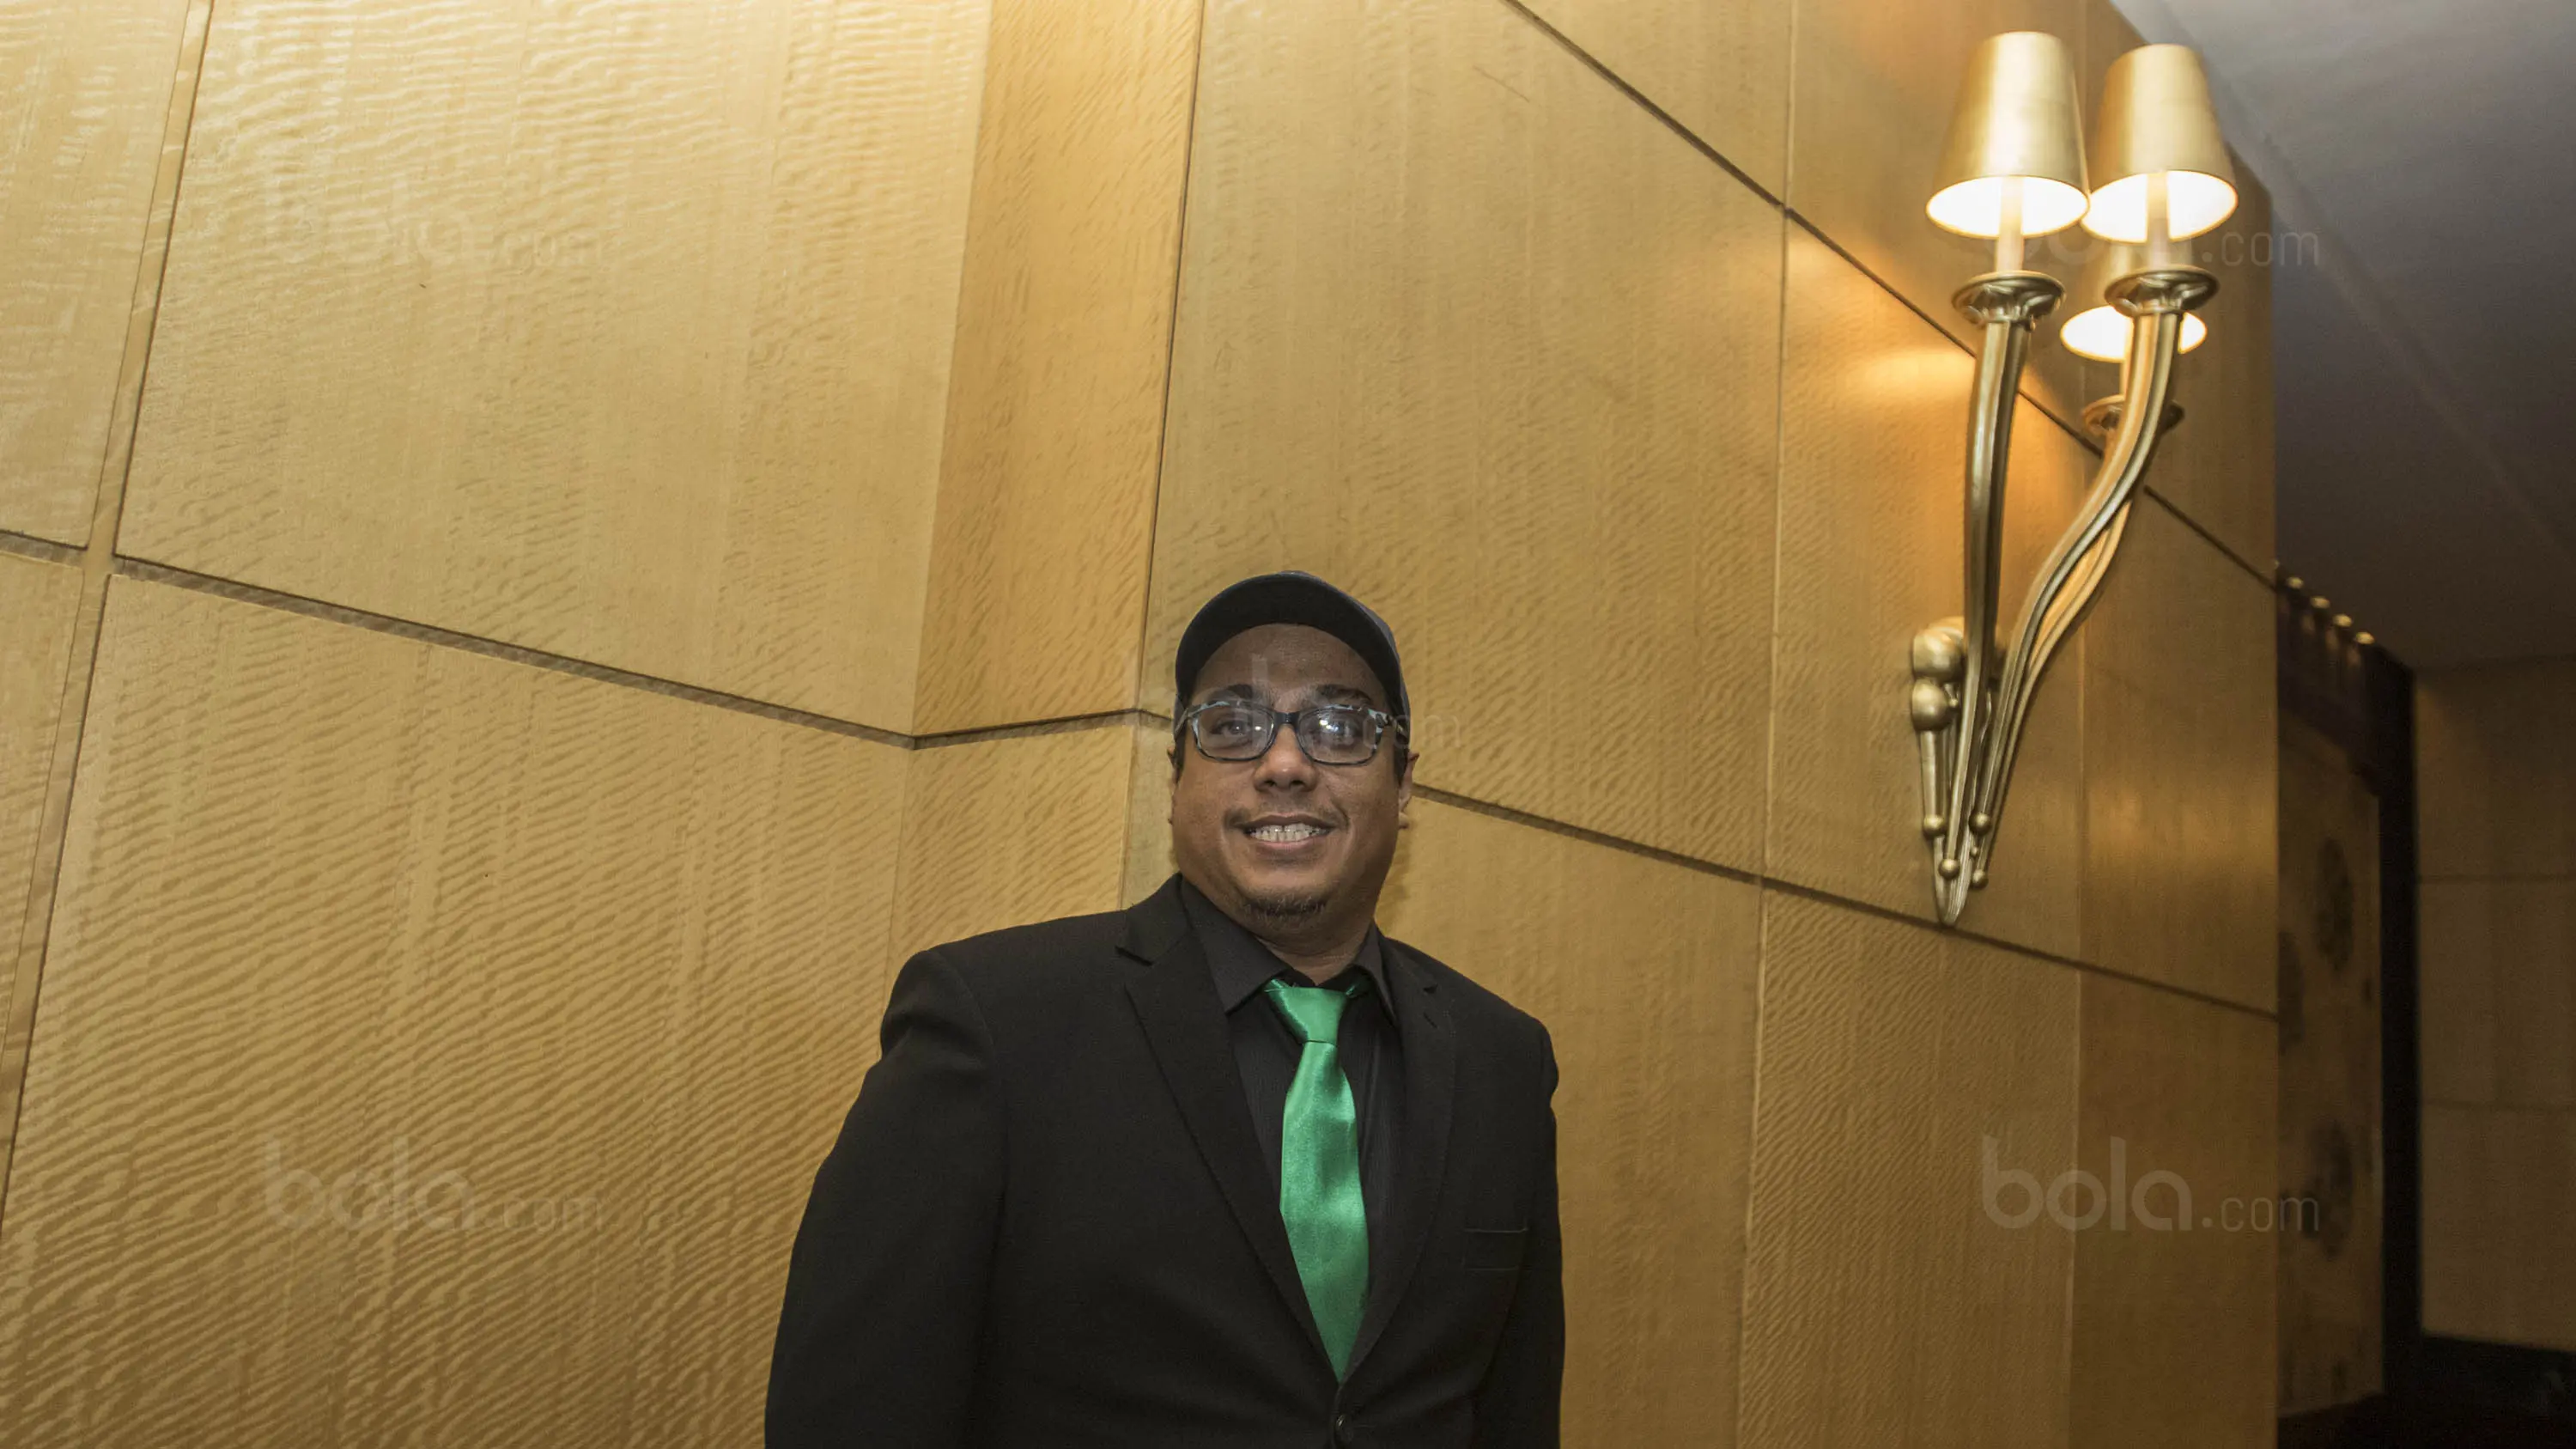 Manajer Persebaya, Chairul Basalamah, saat menghadiri Malam Penghargaan Liga 1 di Hotel Mulia, Jakarta, Jumat (22/12/2017). Acara ini memberi apresiasi kepada sejumlah tokoh sepak bola. (Bola.com/Vitalis Yogi Trisna)